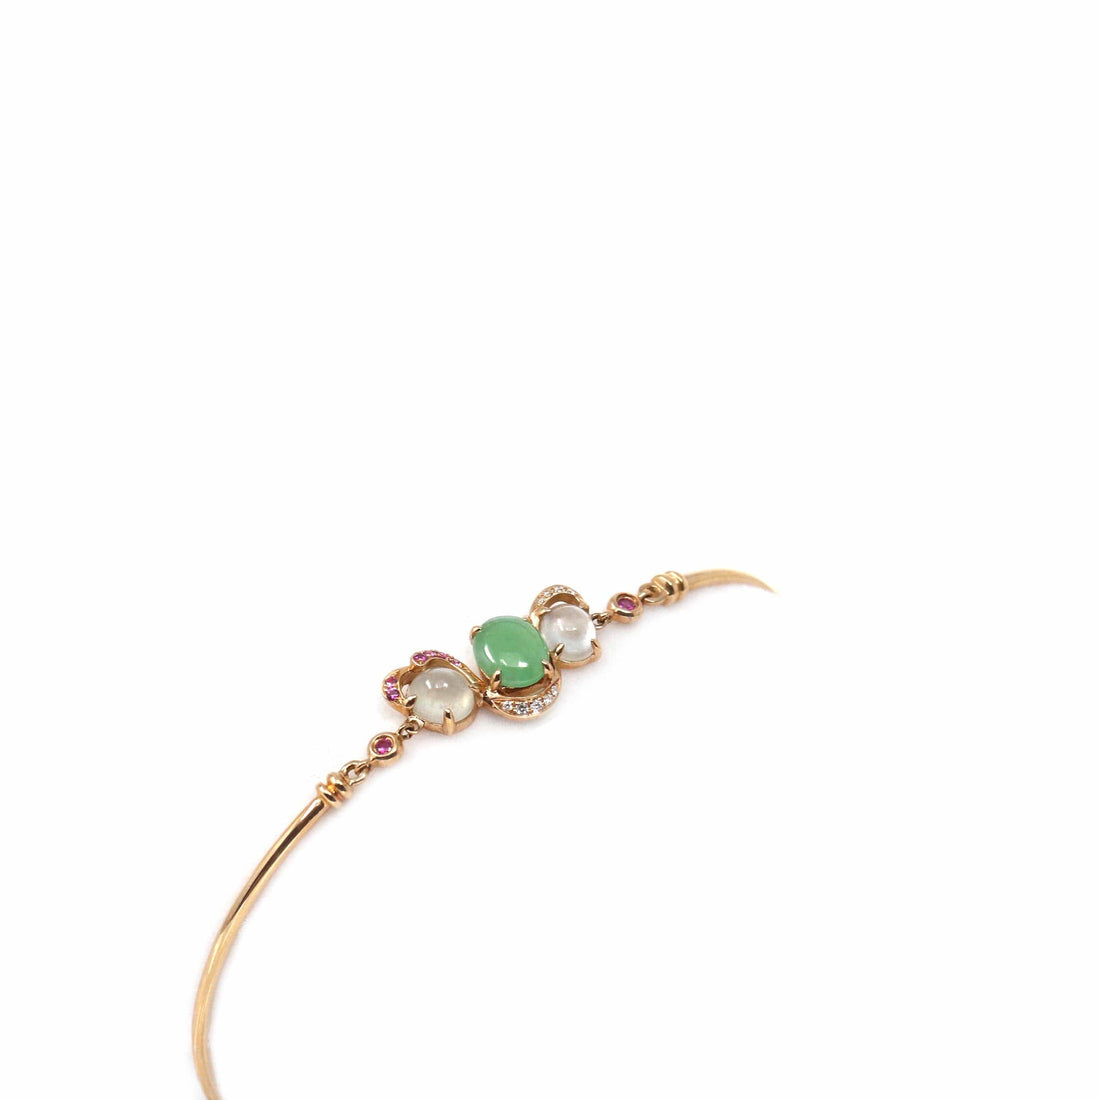 Baikalla Jewelry Gold Jade Bracelet Copy of Copy of 18k Rose Gold "Morning Glory" Half Bracelet Bangle with Green Imperial Jade & Diamonds